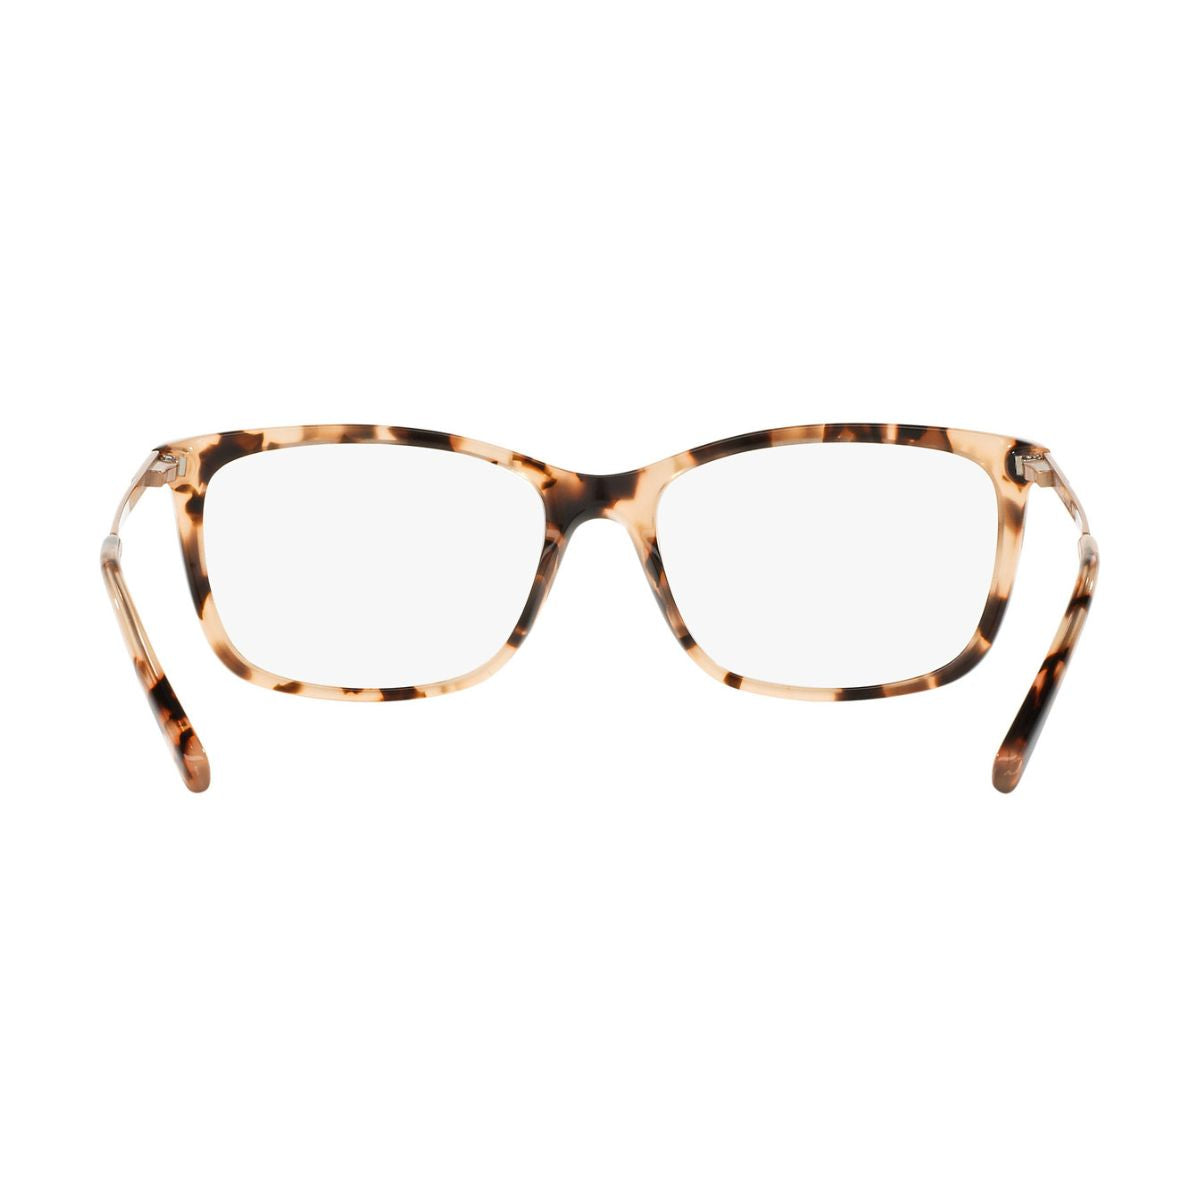 "stylish Michael Kors 4030 3162 trendy eyewear frame for women's at optorium"